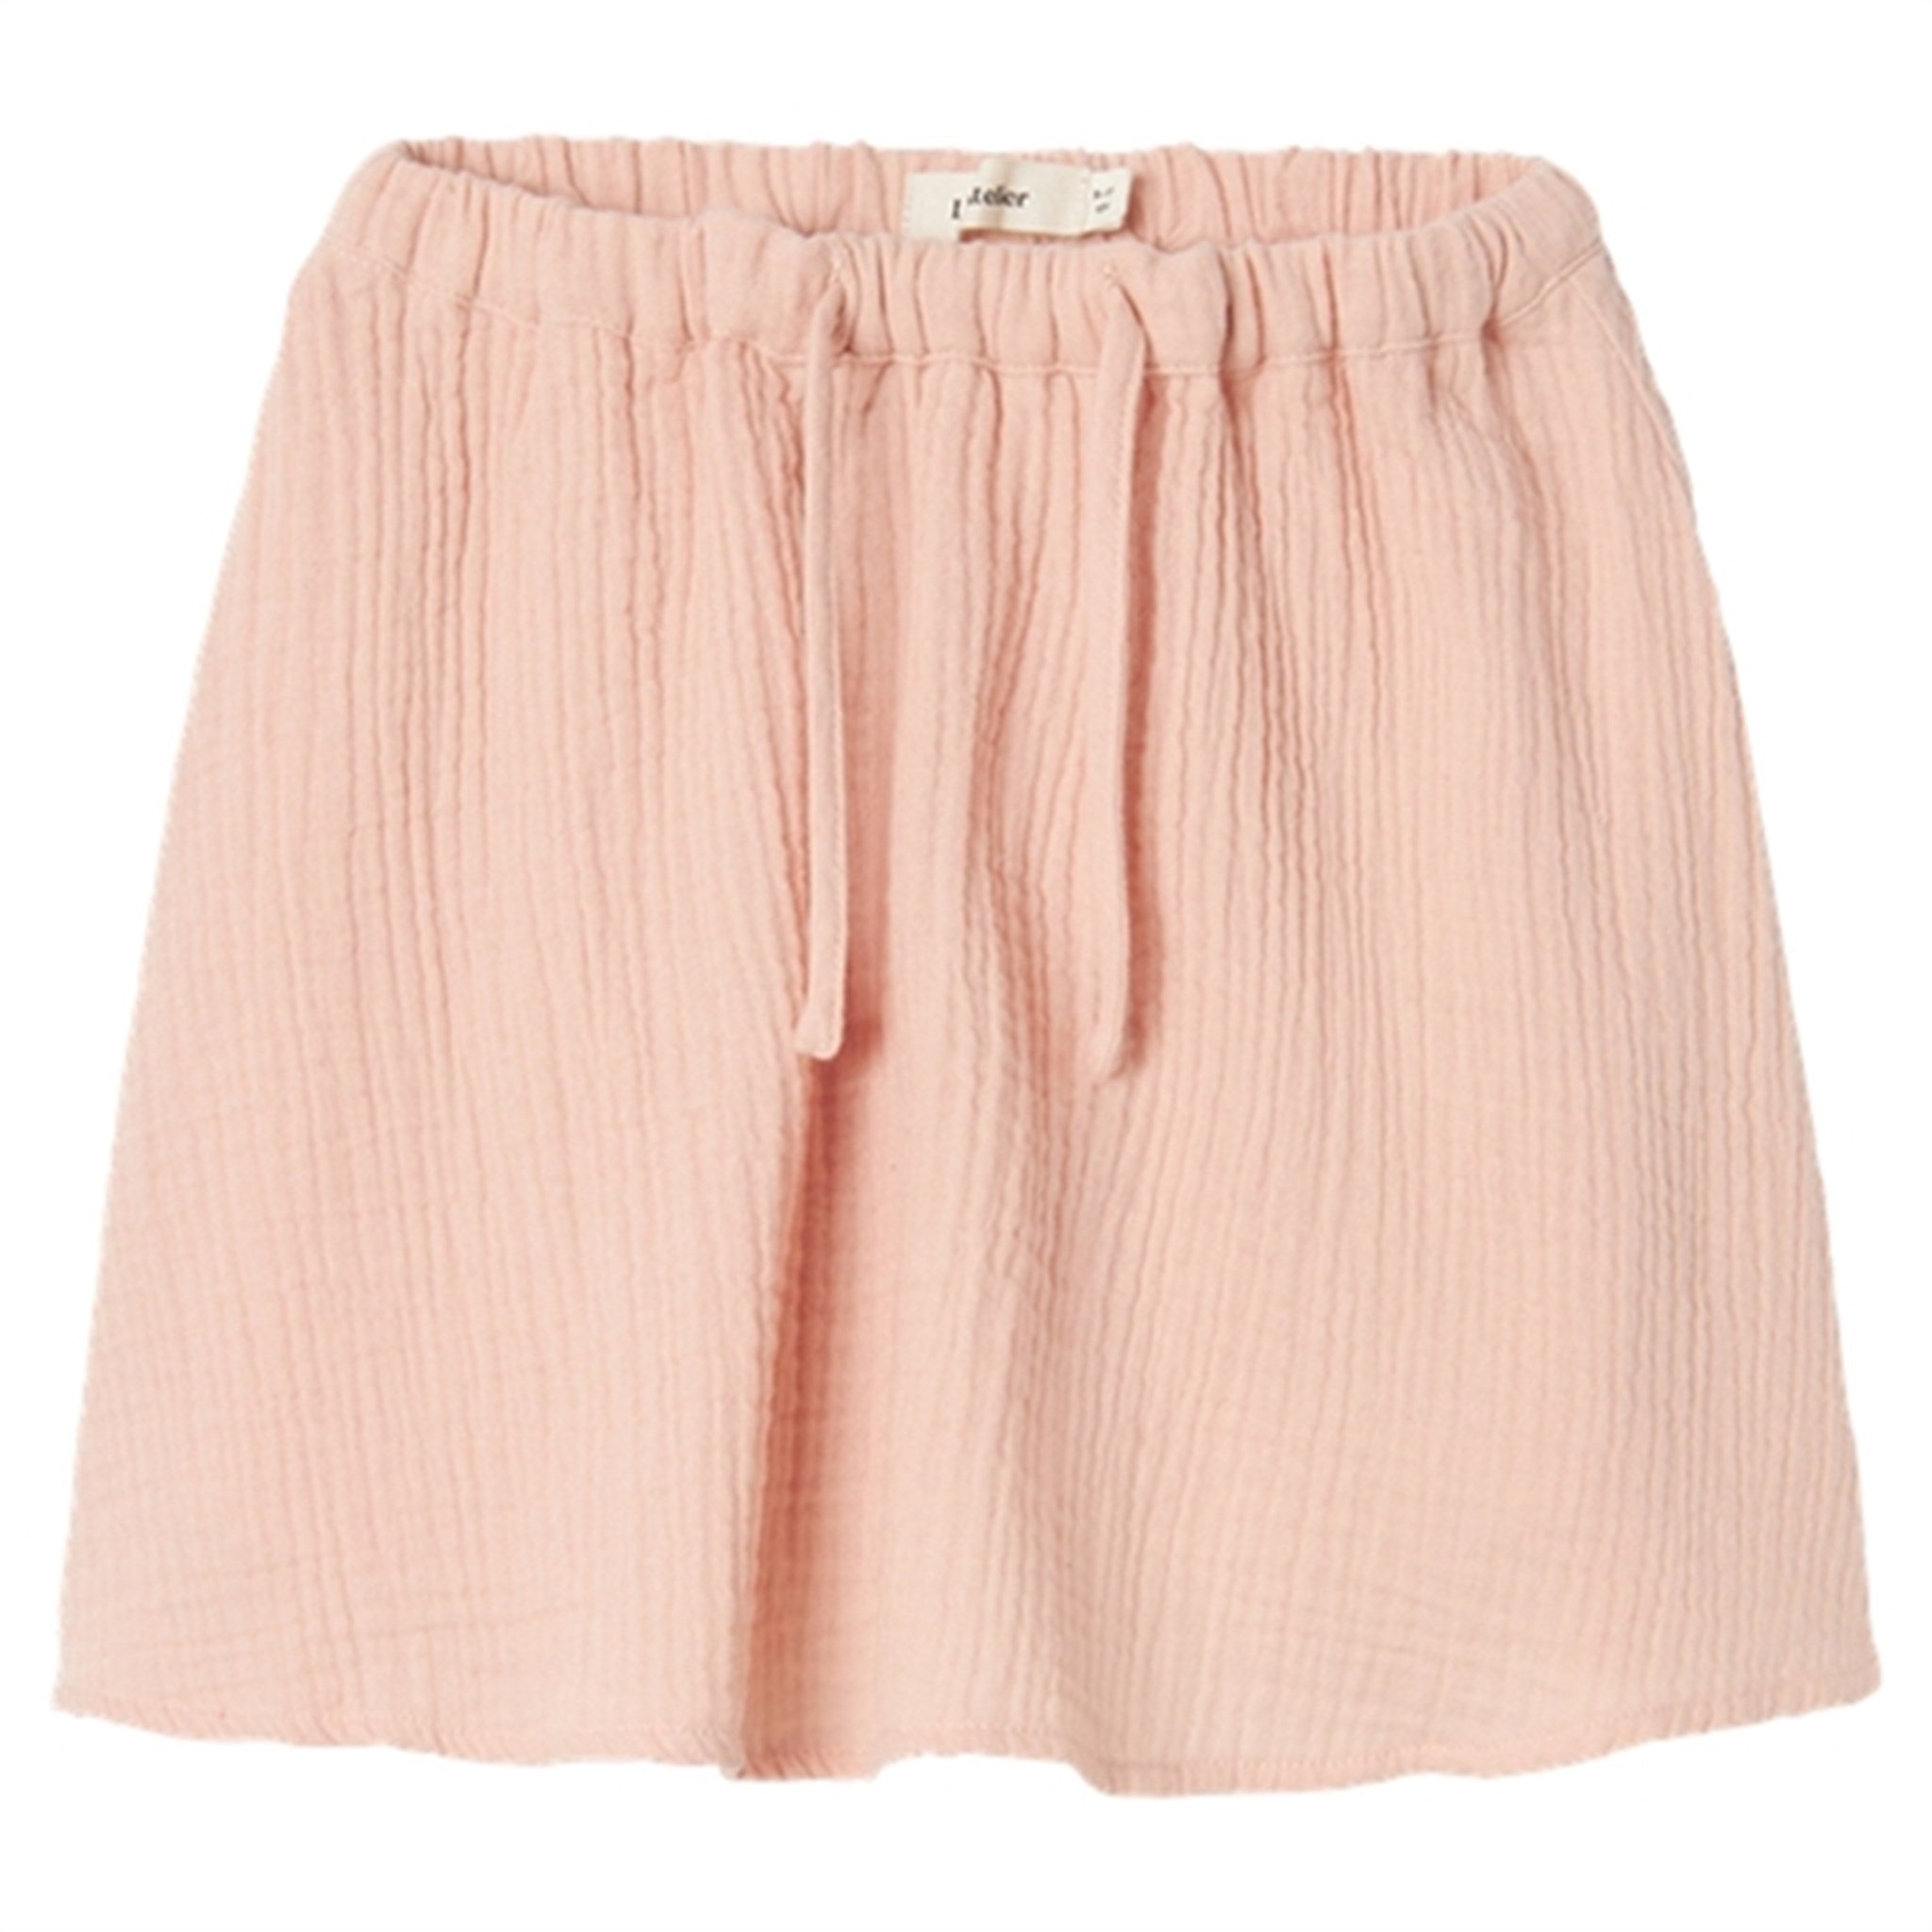 Lil'Atelier Cameo Rose Solid Biba Skirt